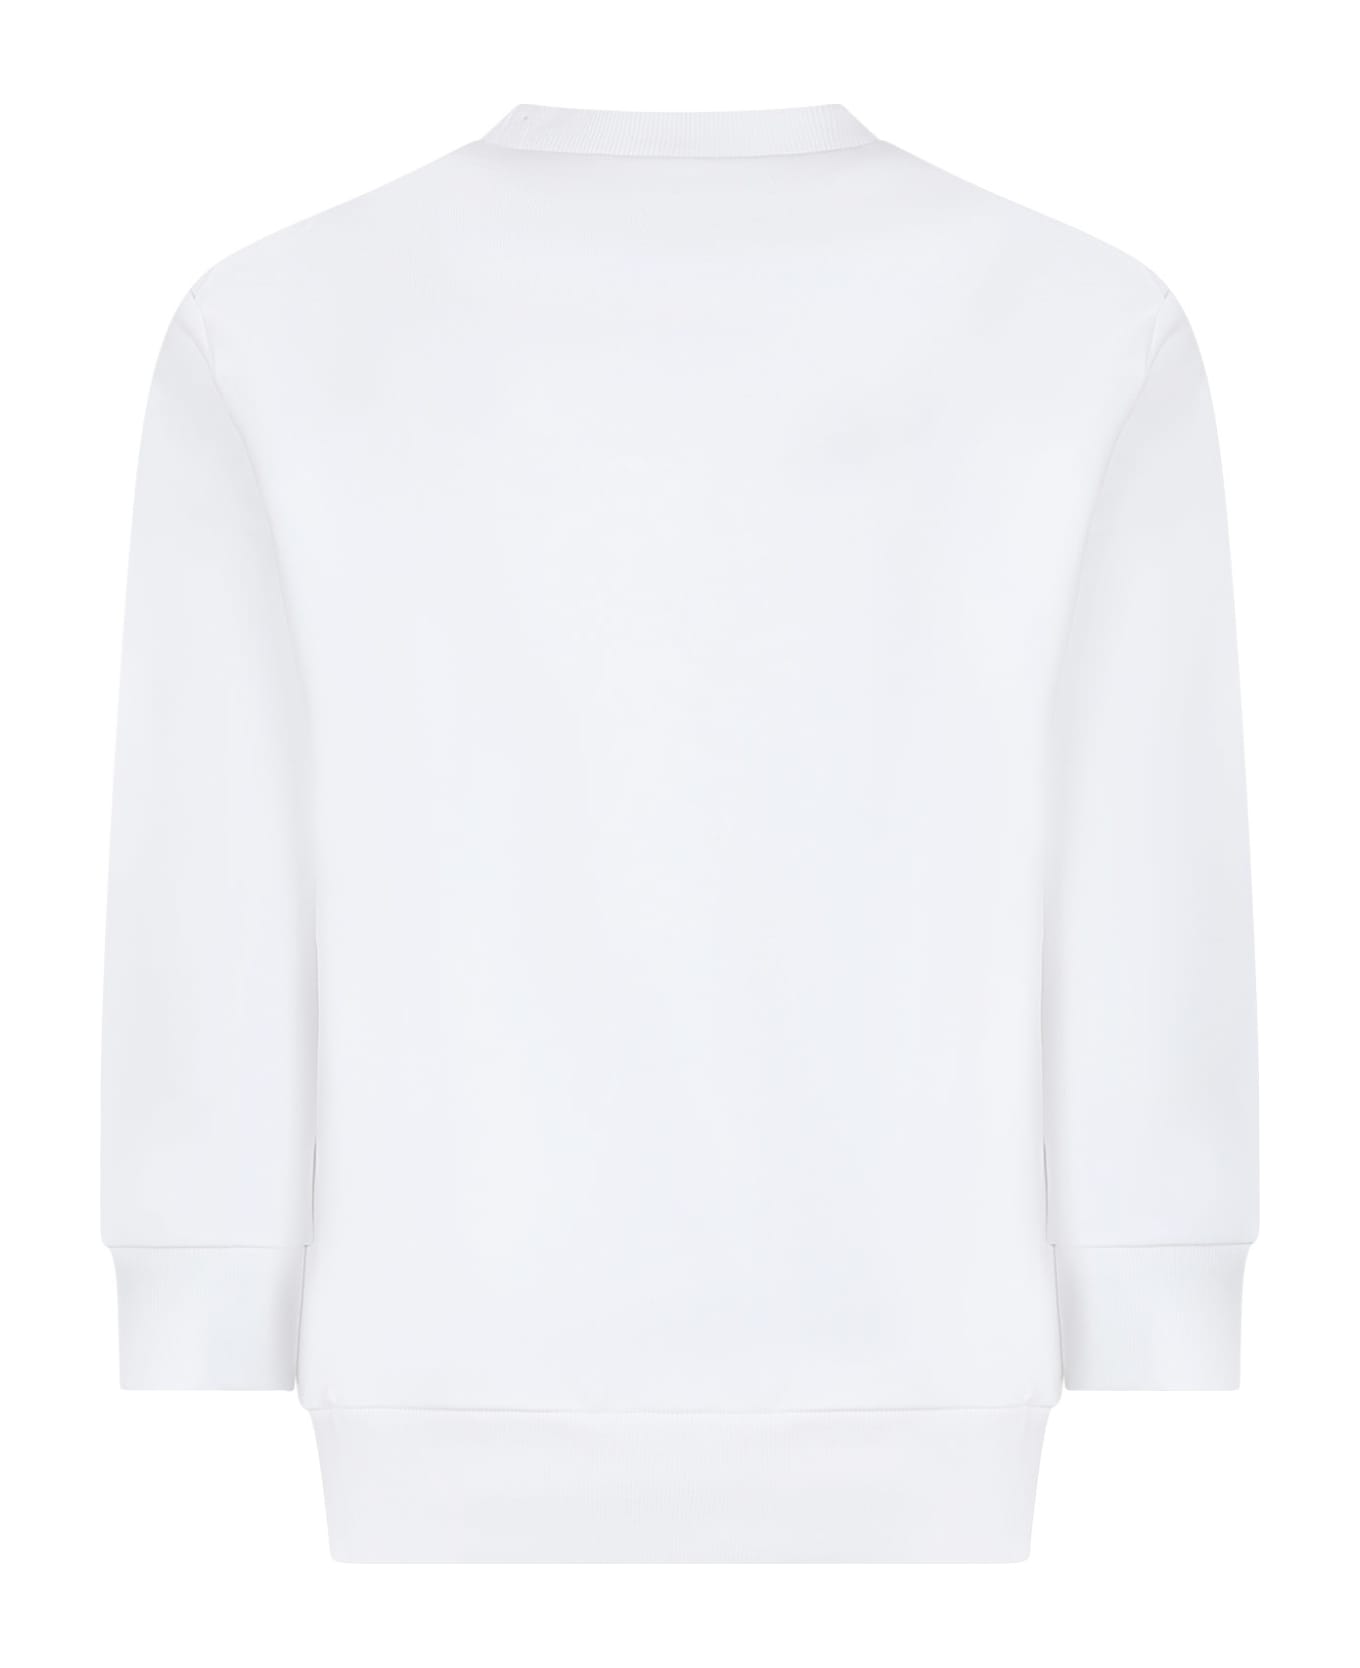 Marni White T-shirt For Kids With Logo - White